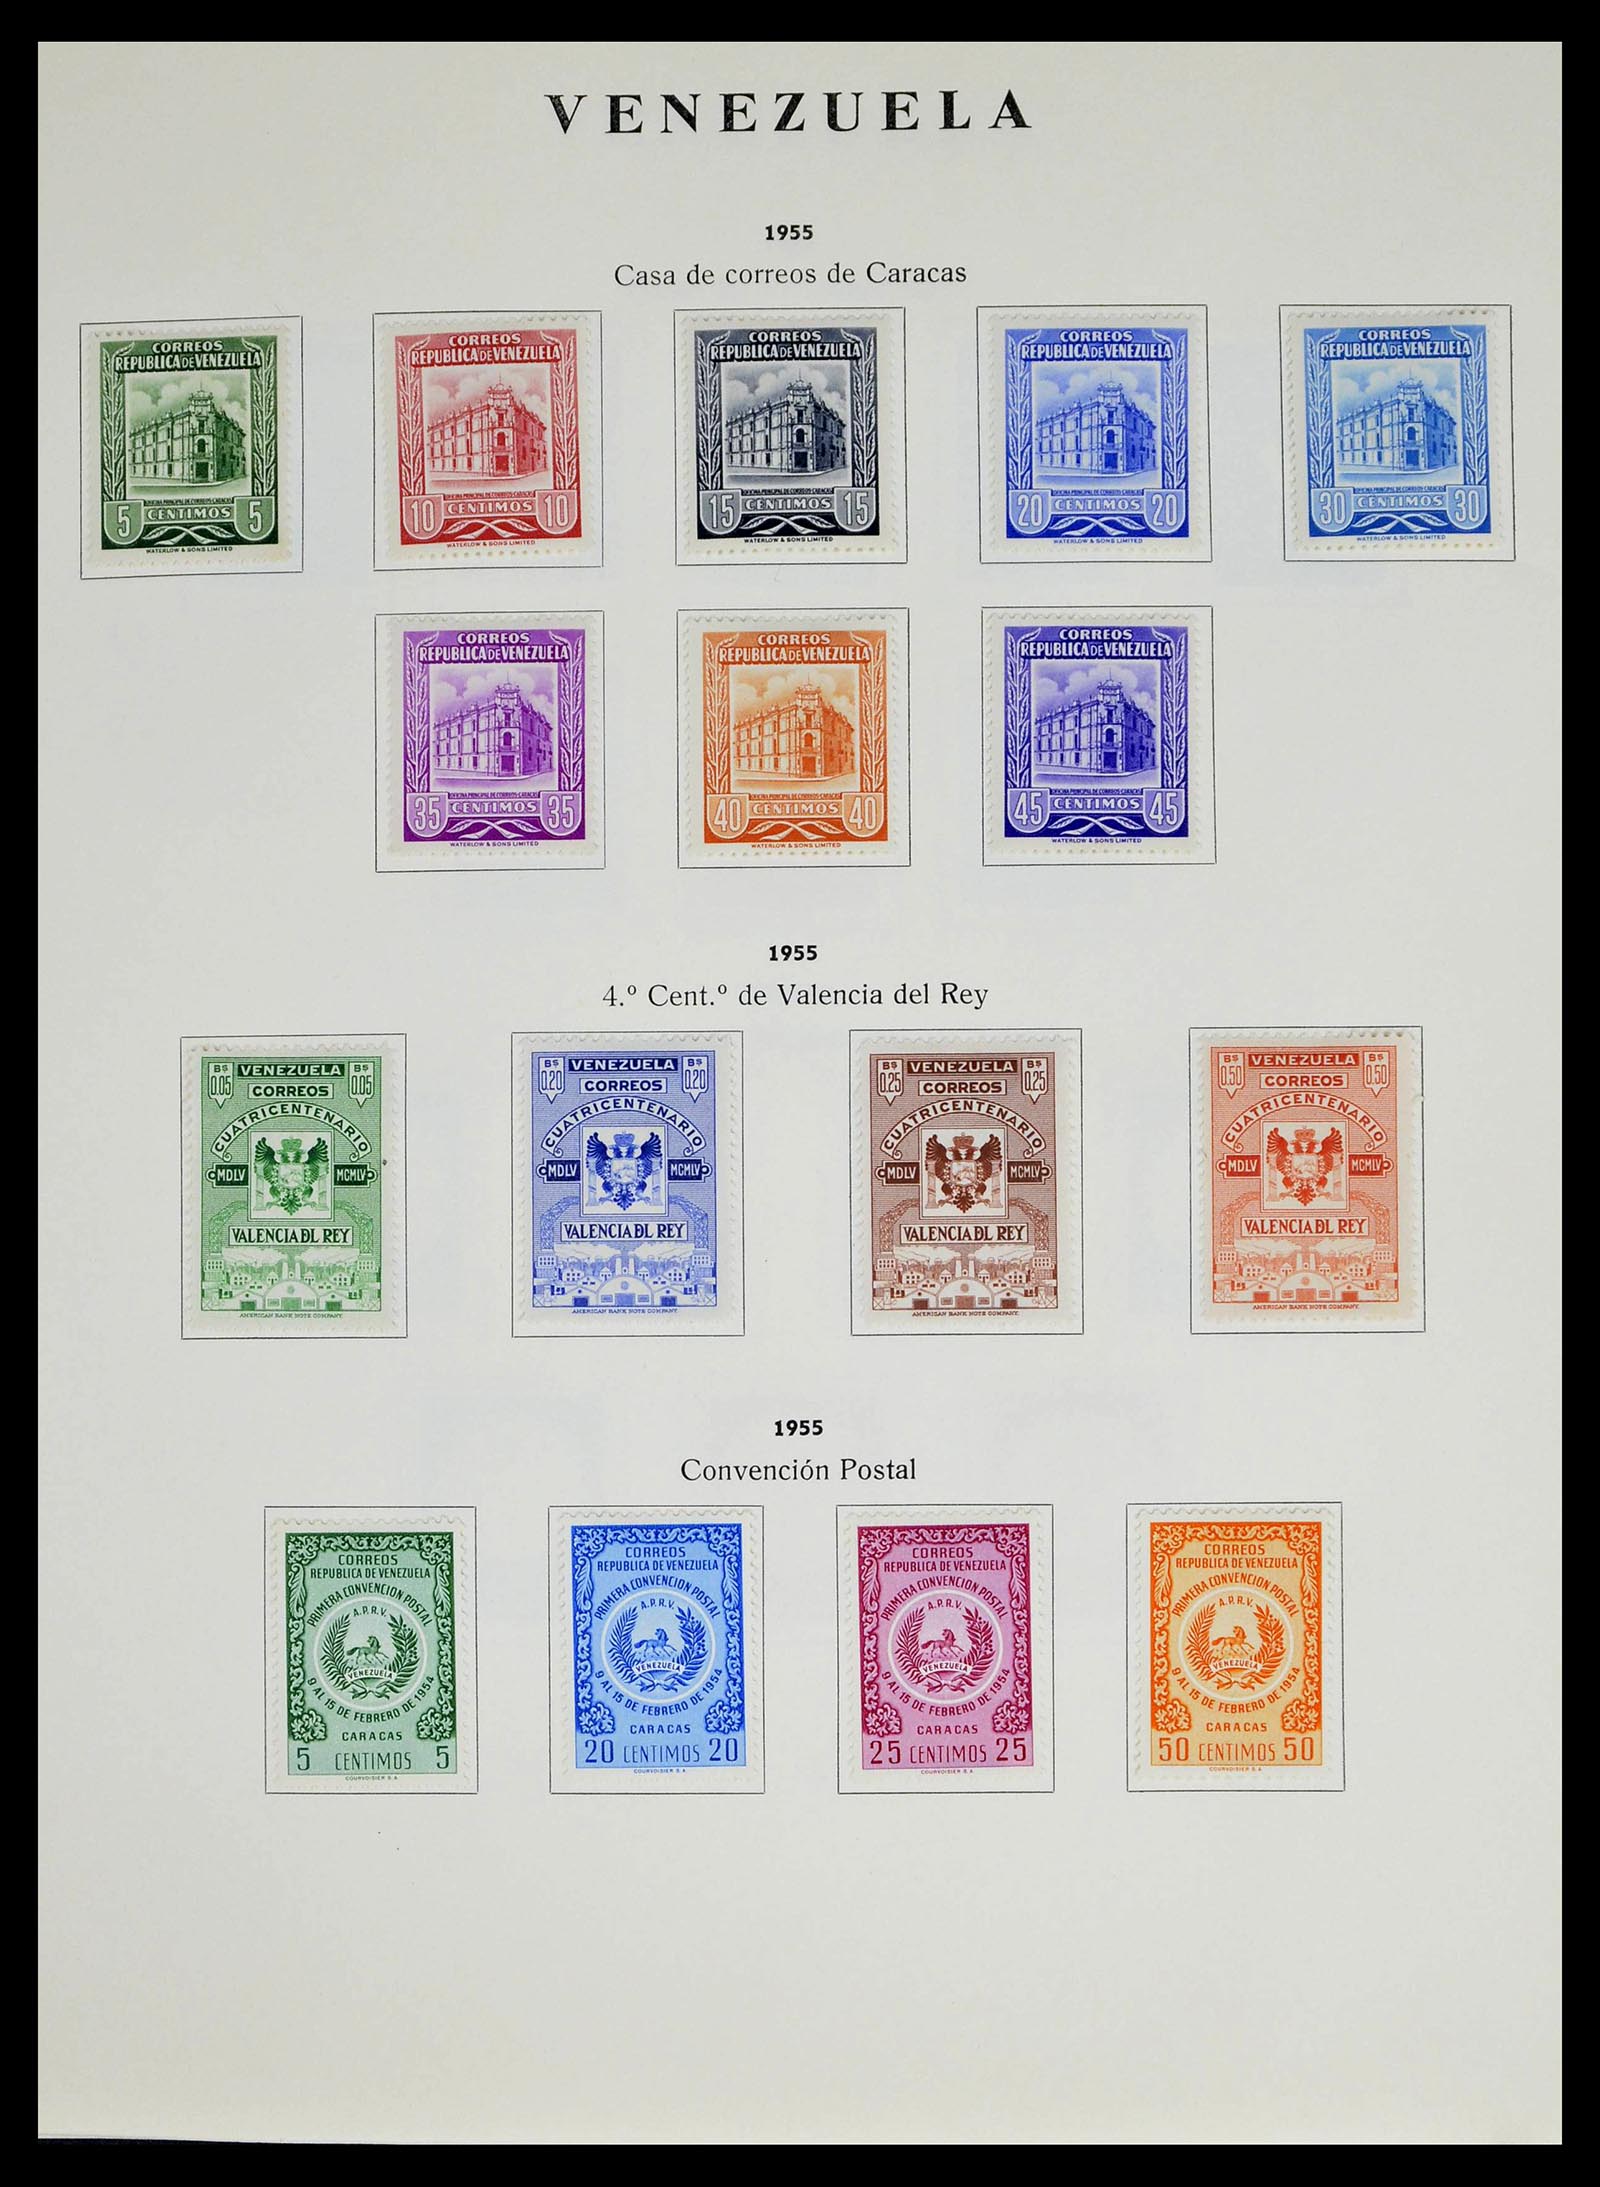 39223 0037 - Stamp collection 39223 Venezuela 1859-1984.